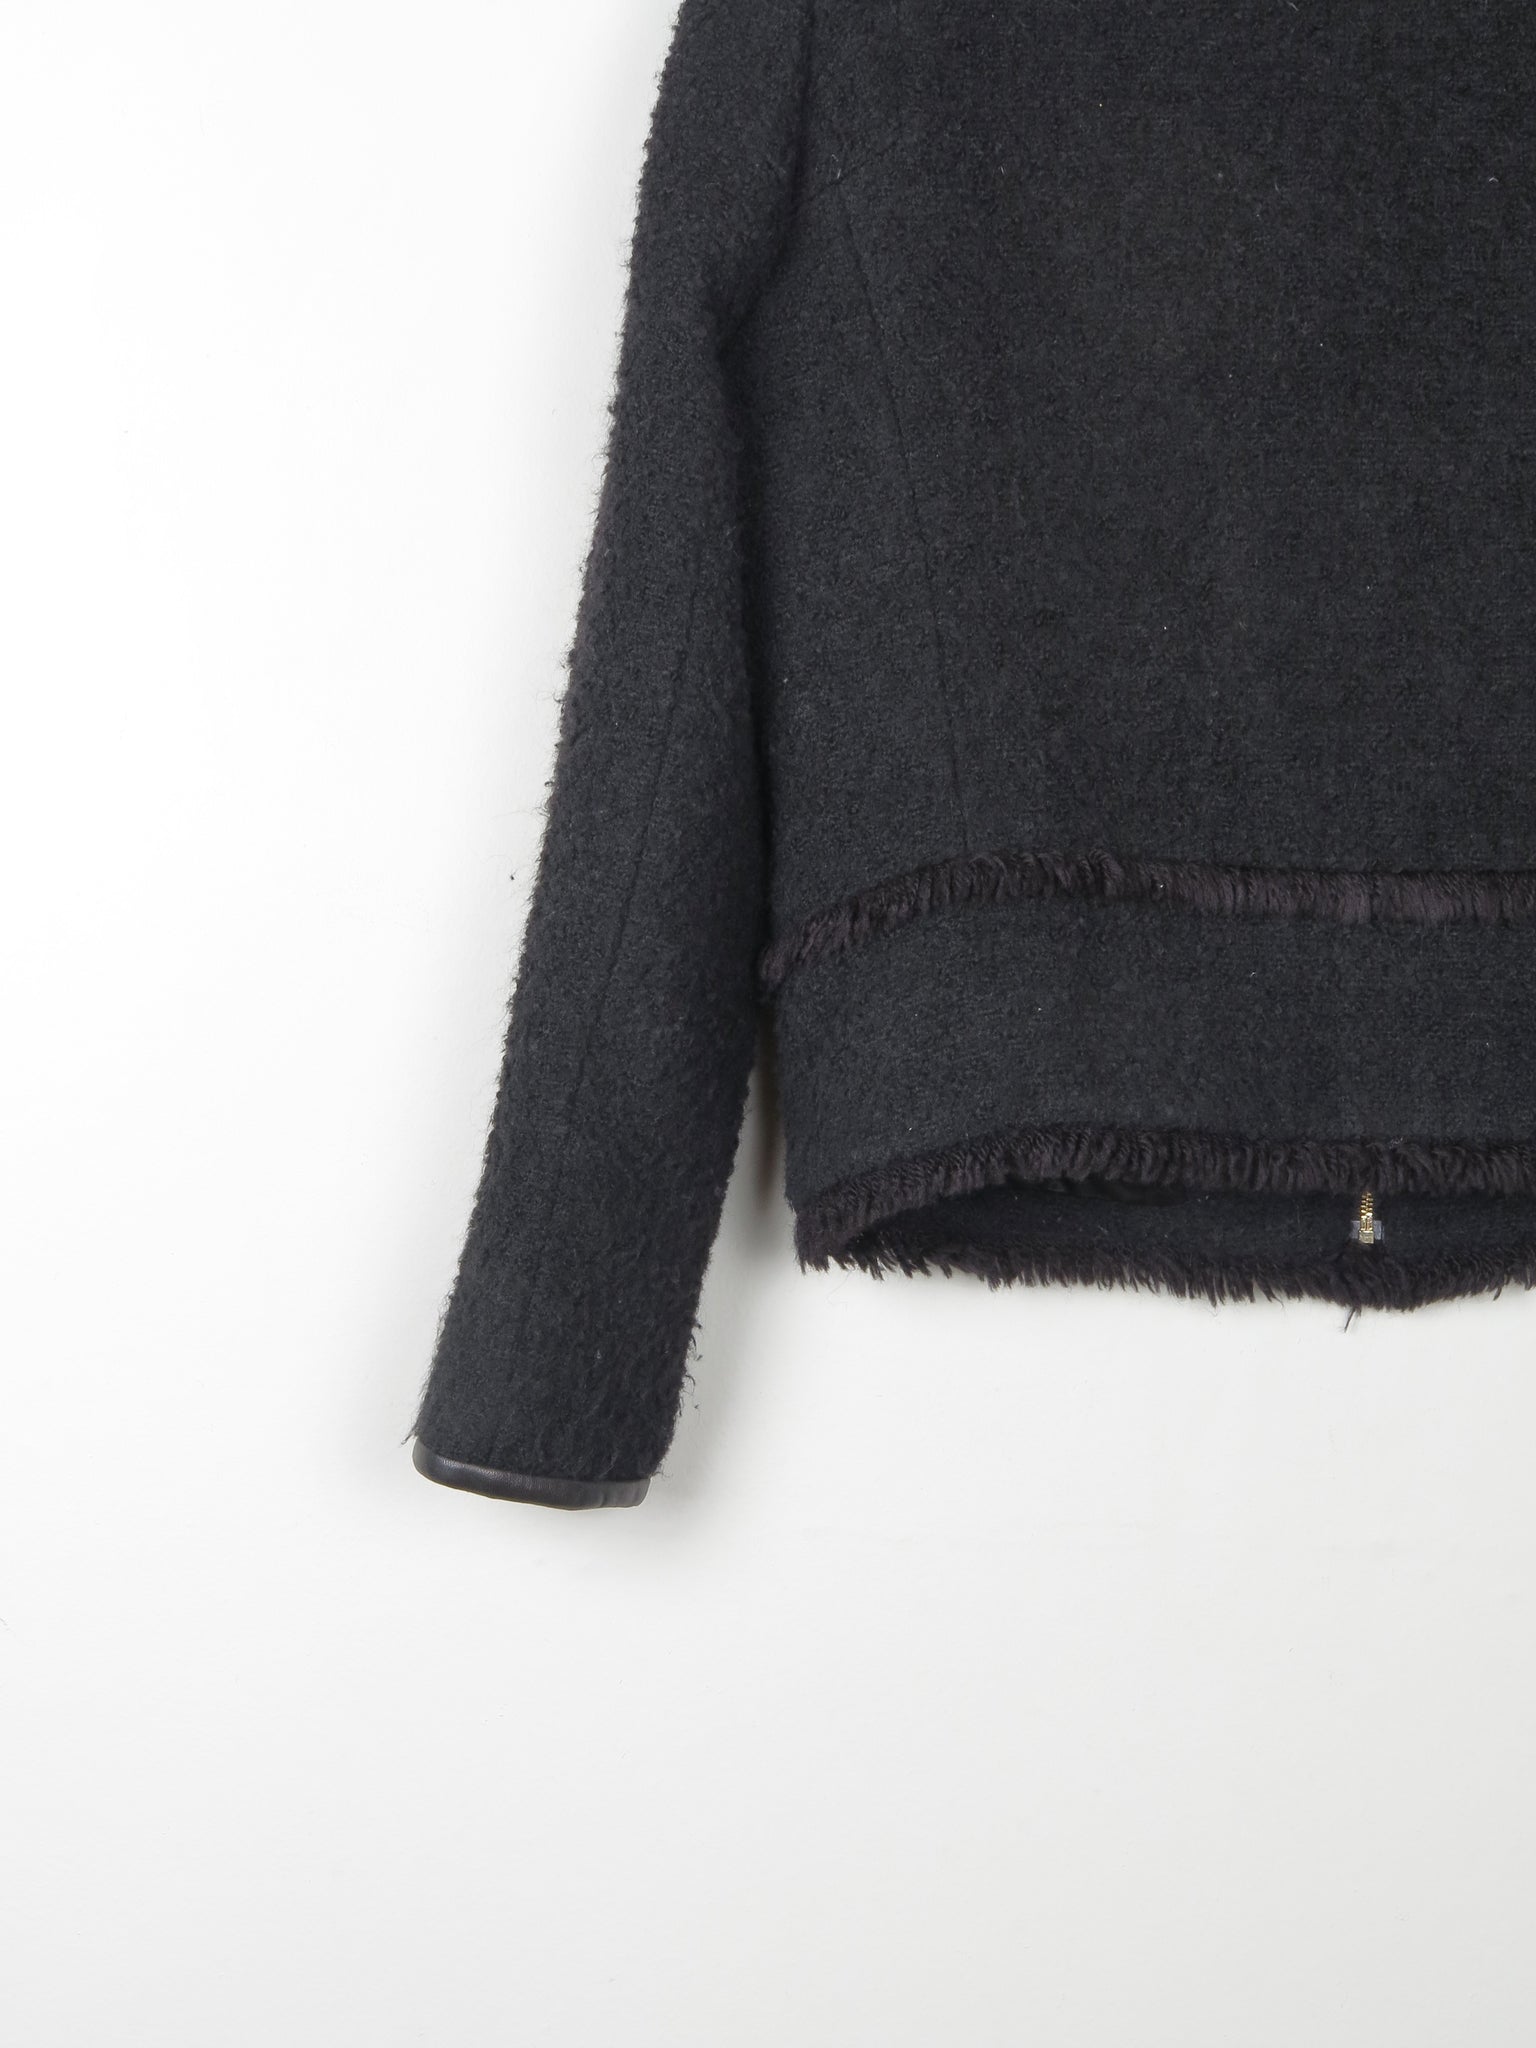 Women's Black Wool Boucle Collarless Jacket S